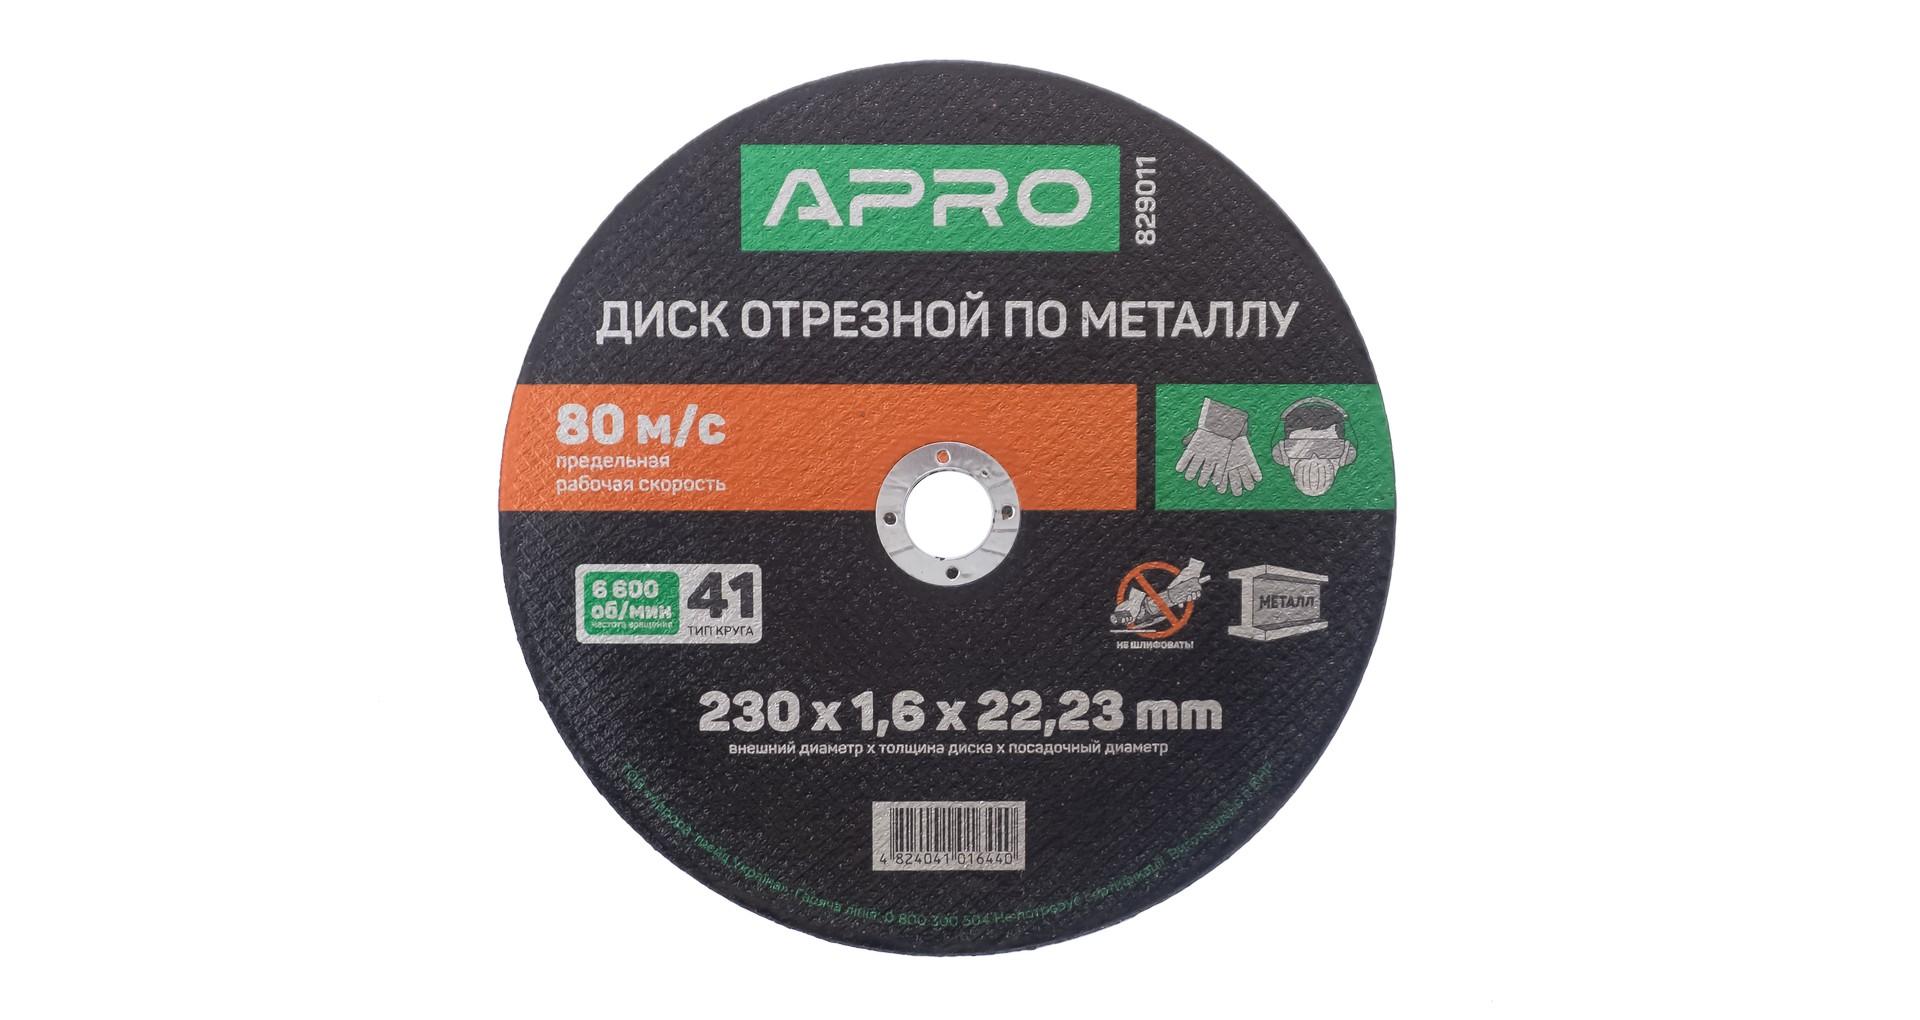 Диск отрезной по металлу Apro - 230 х 1,6 х 22,2 мм 3